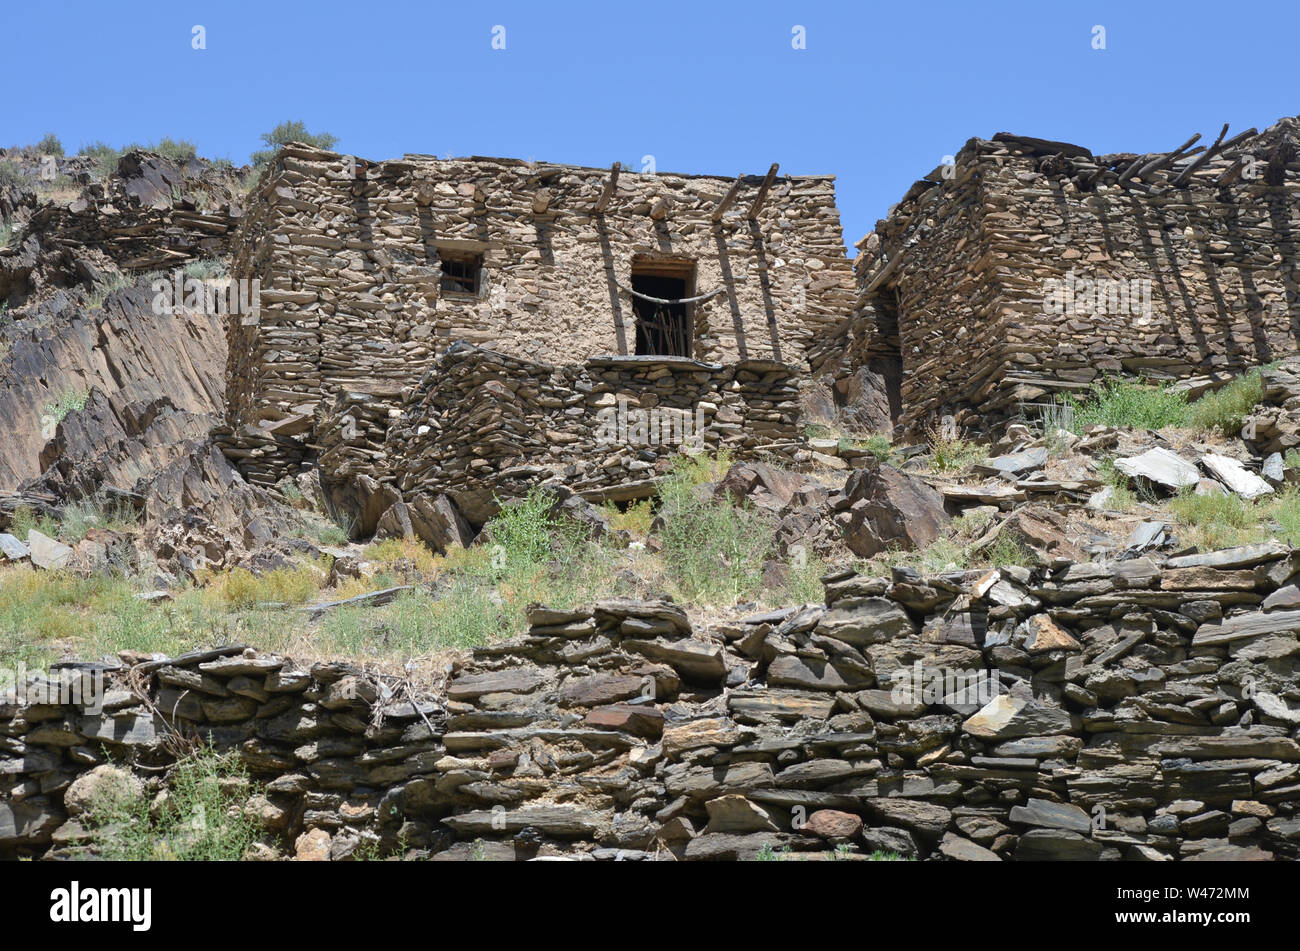 La arquitectura tradicional de las aldeas de montaña de Nuratau Ridge, Central de Uzbekistán Foto de stock